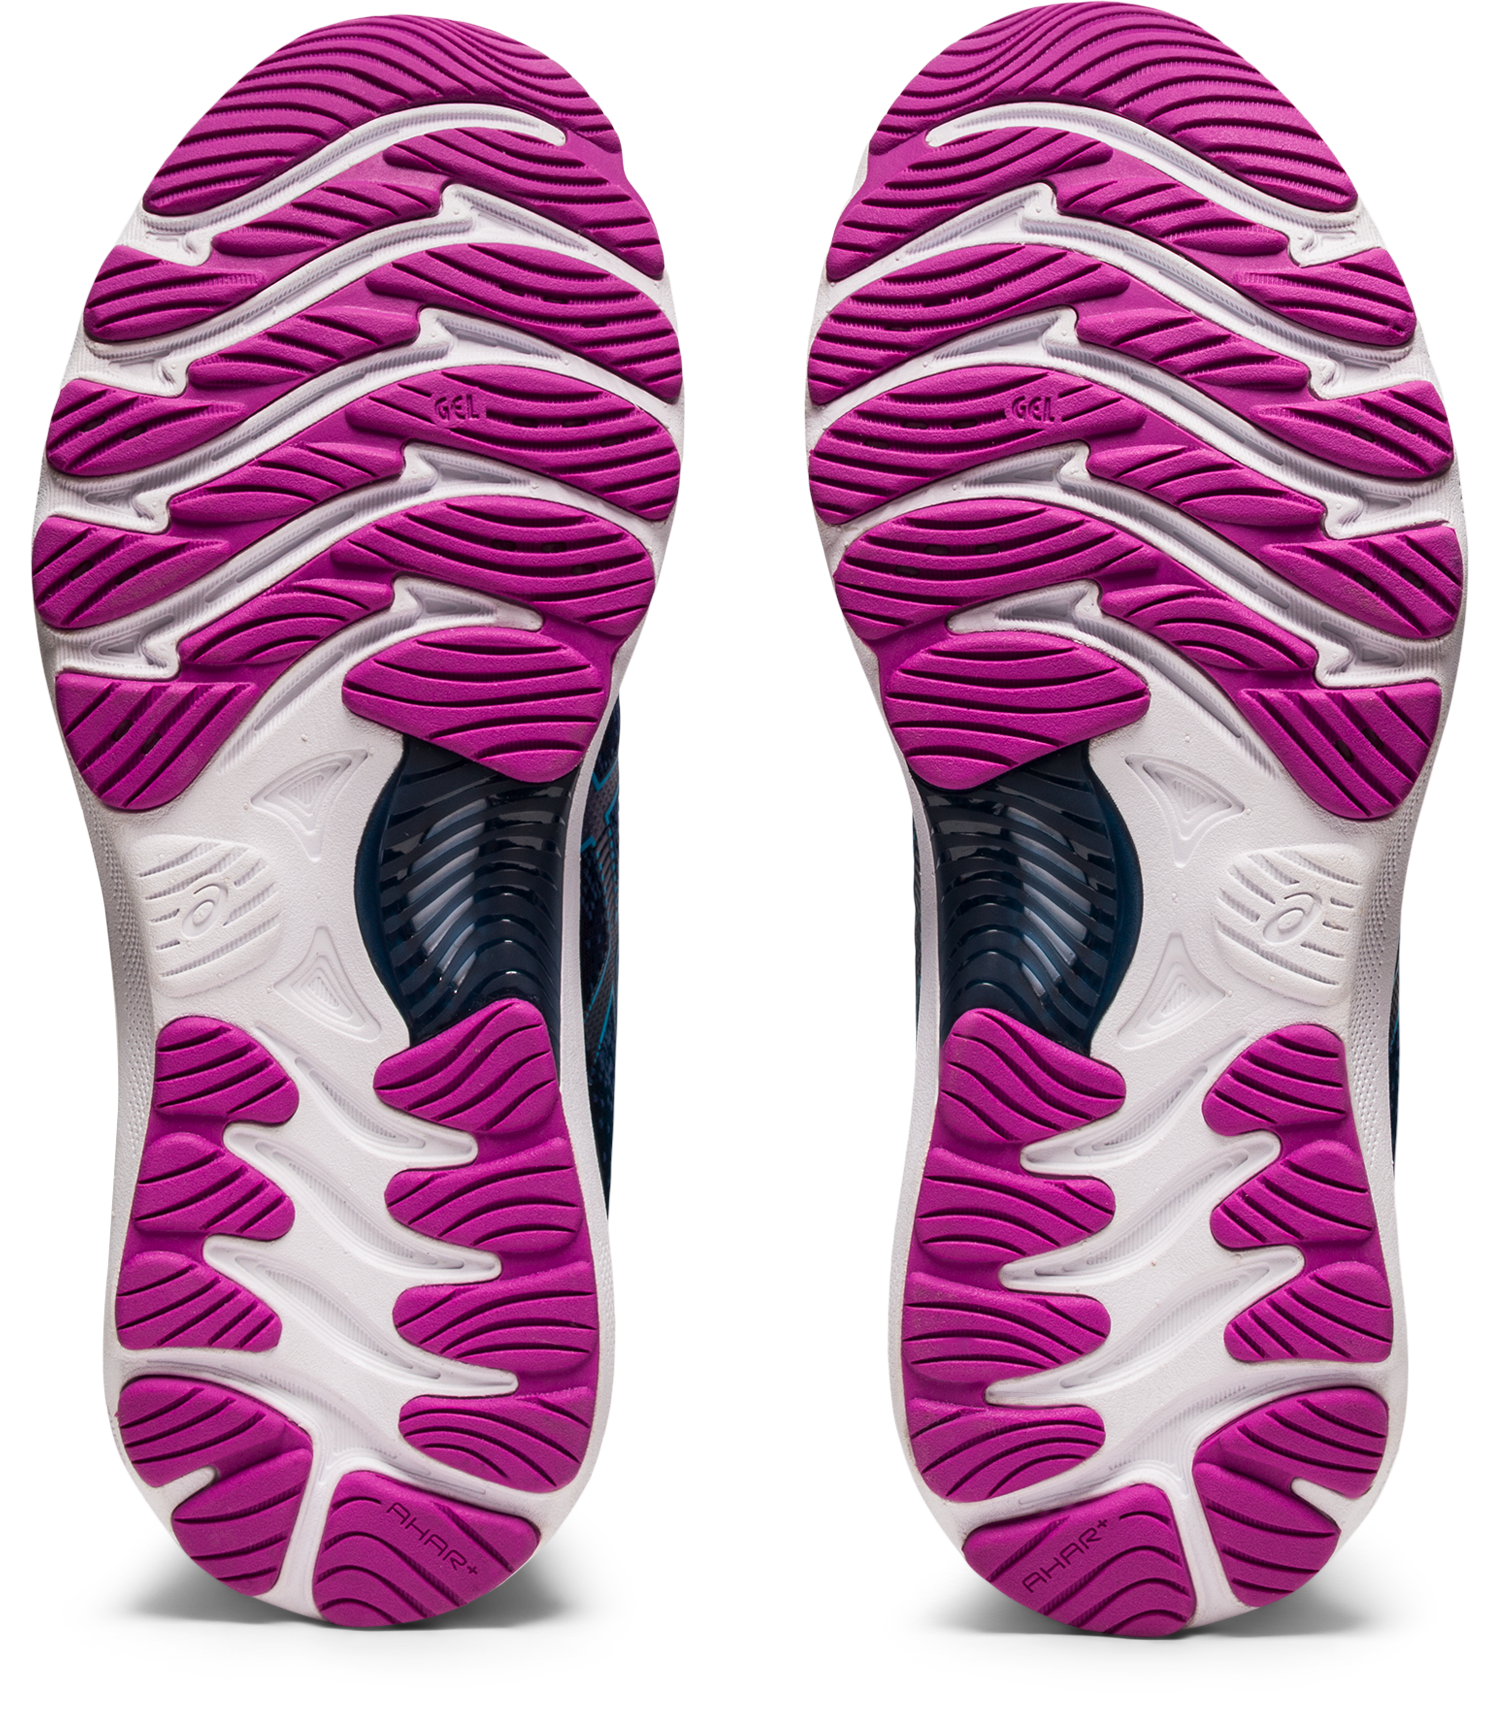 Asics Women's Gel-Nimbus 23 Running Shoes in Grand Shark/Digital Aqua